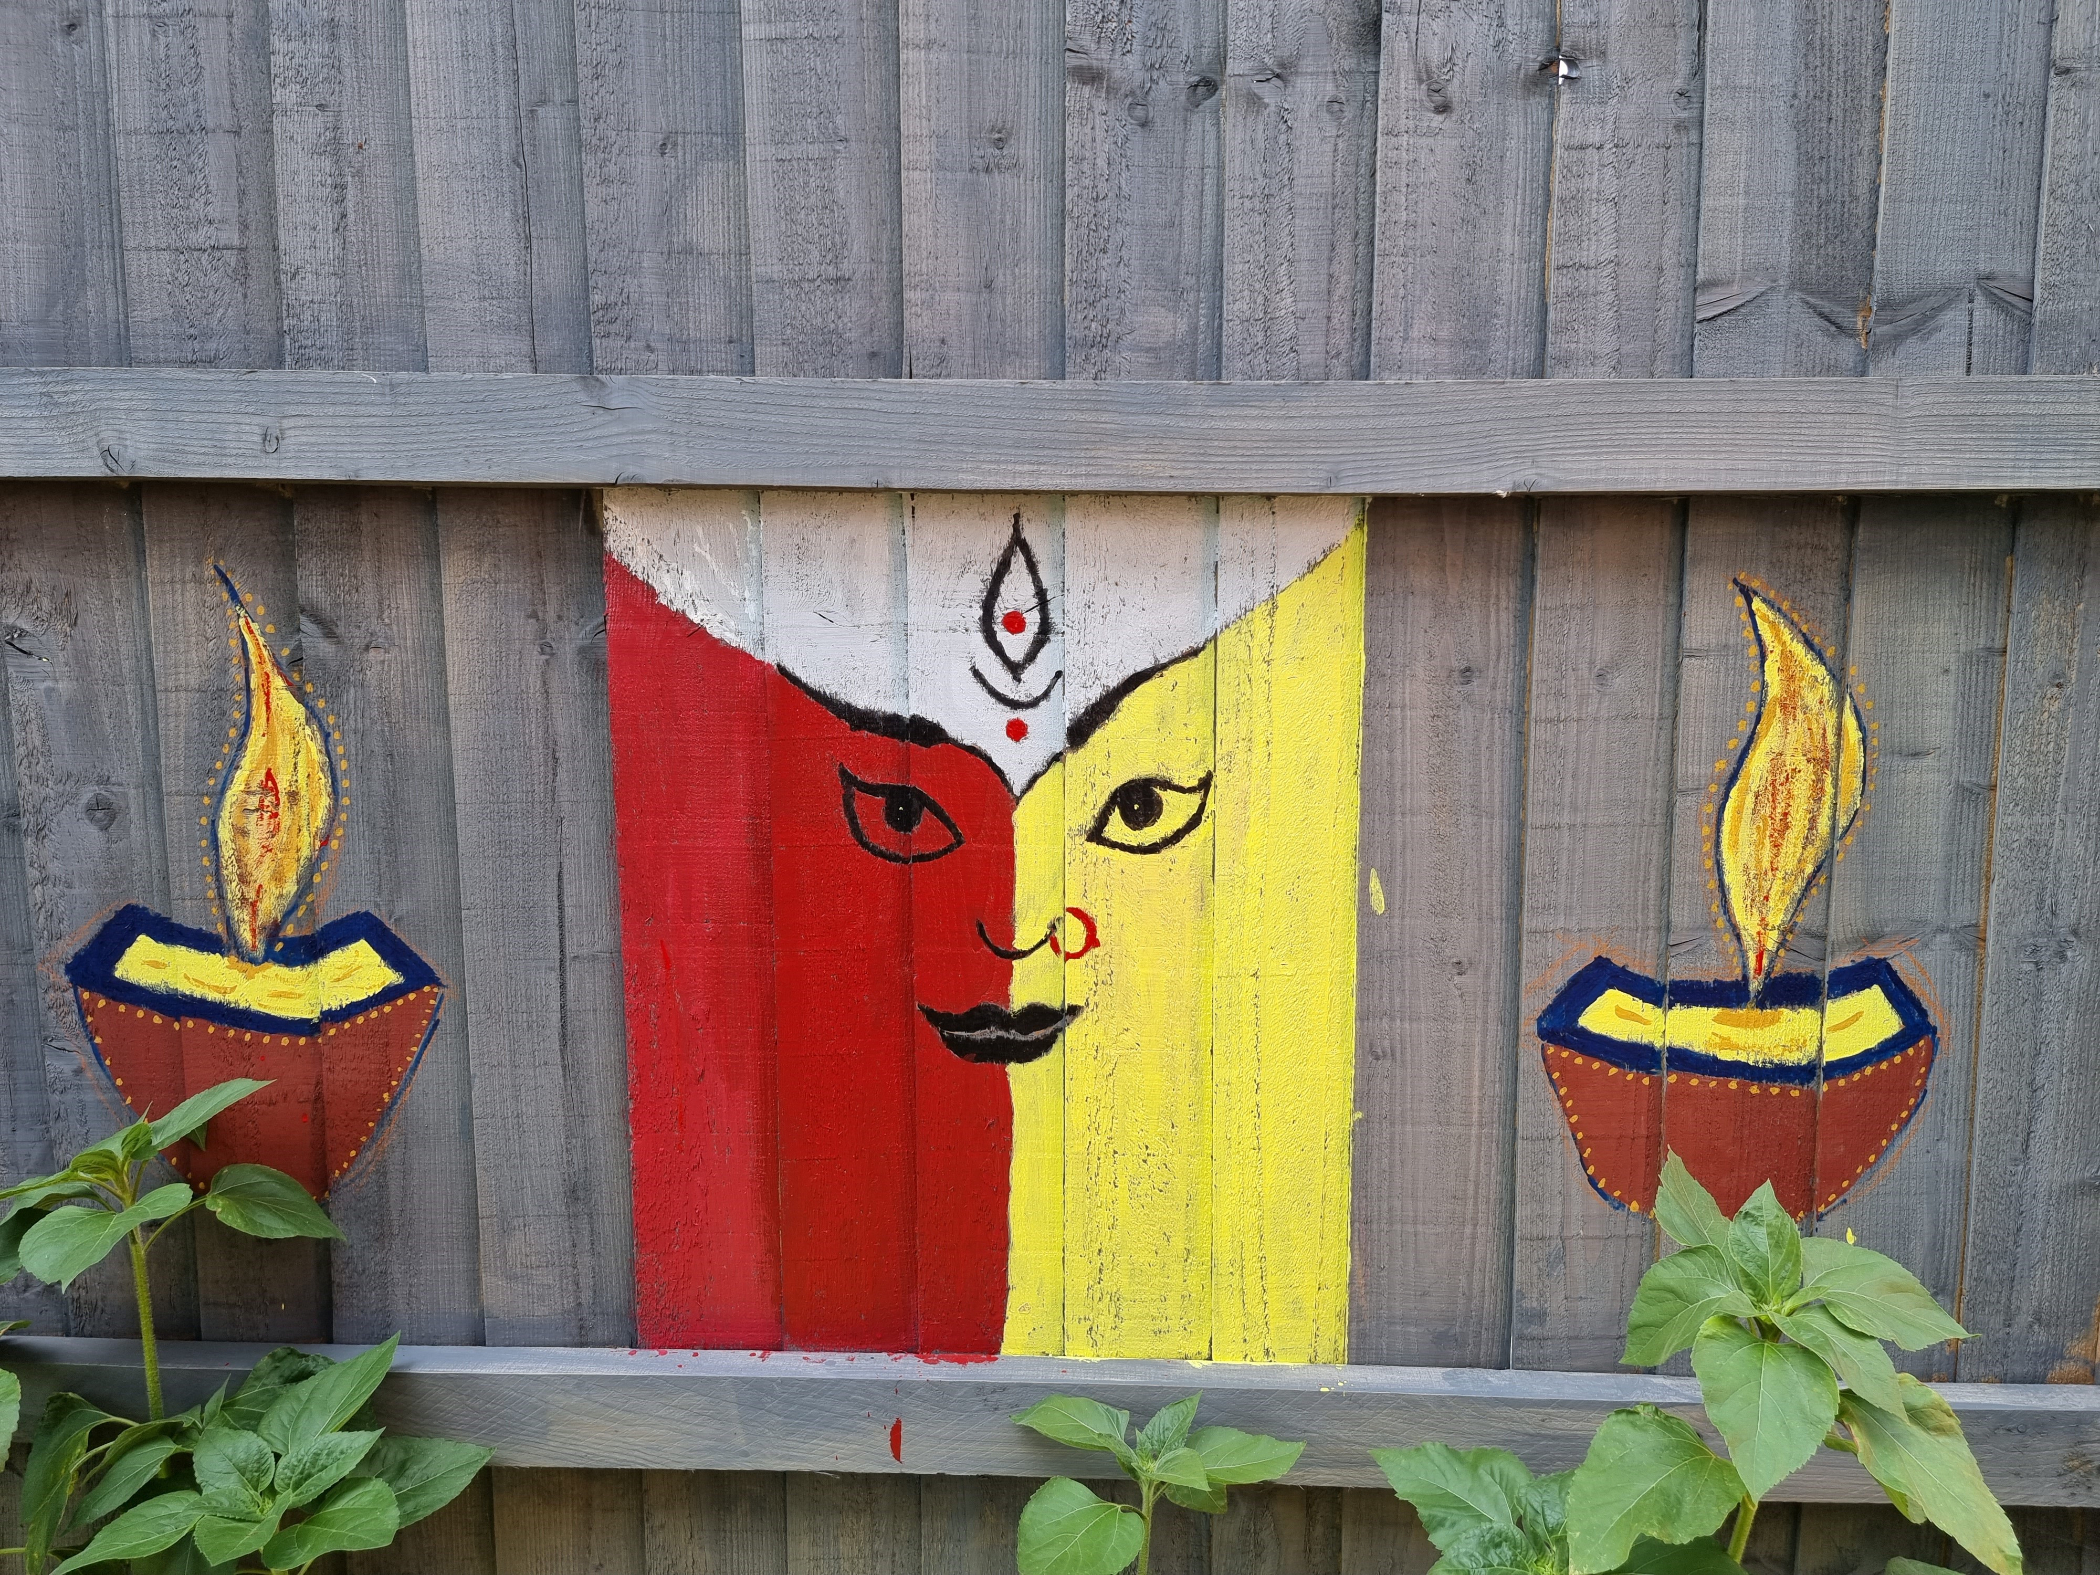 Painting on fence of Goddess Kali 